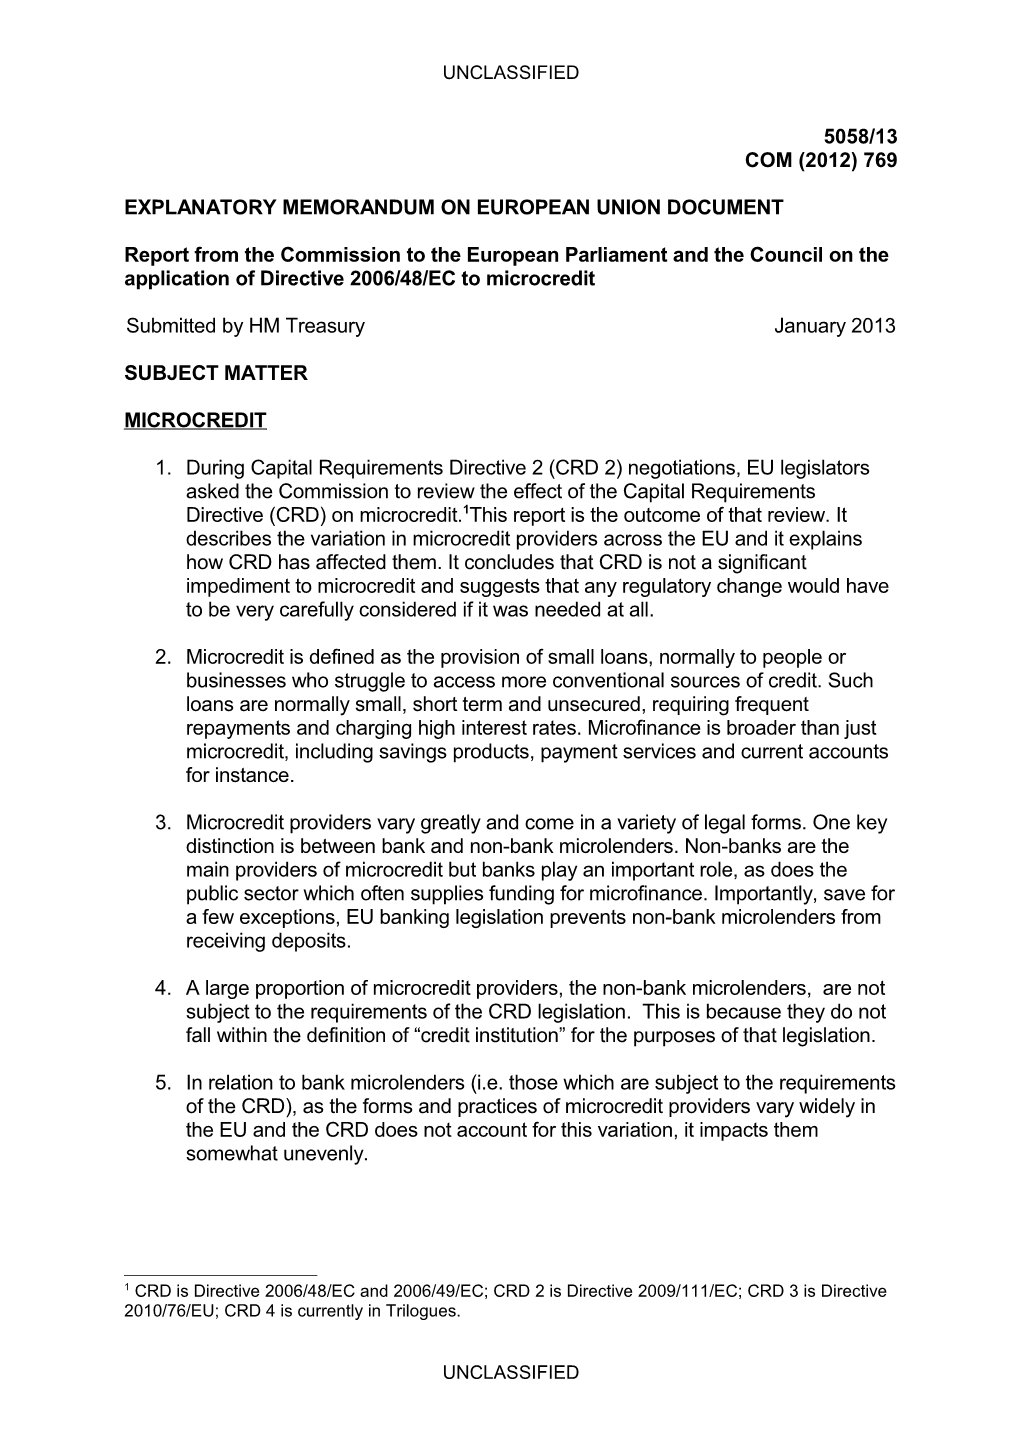 Explanatory Memorandum on European Union Document